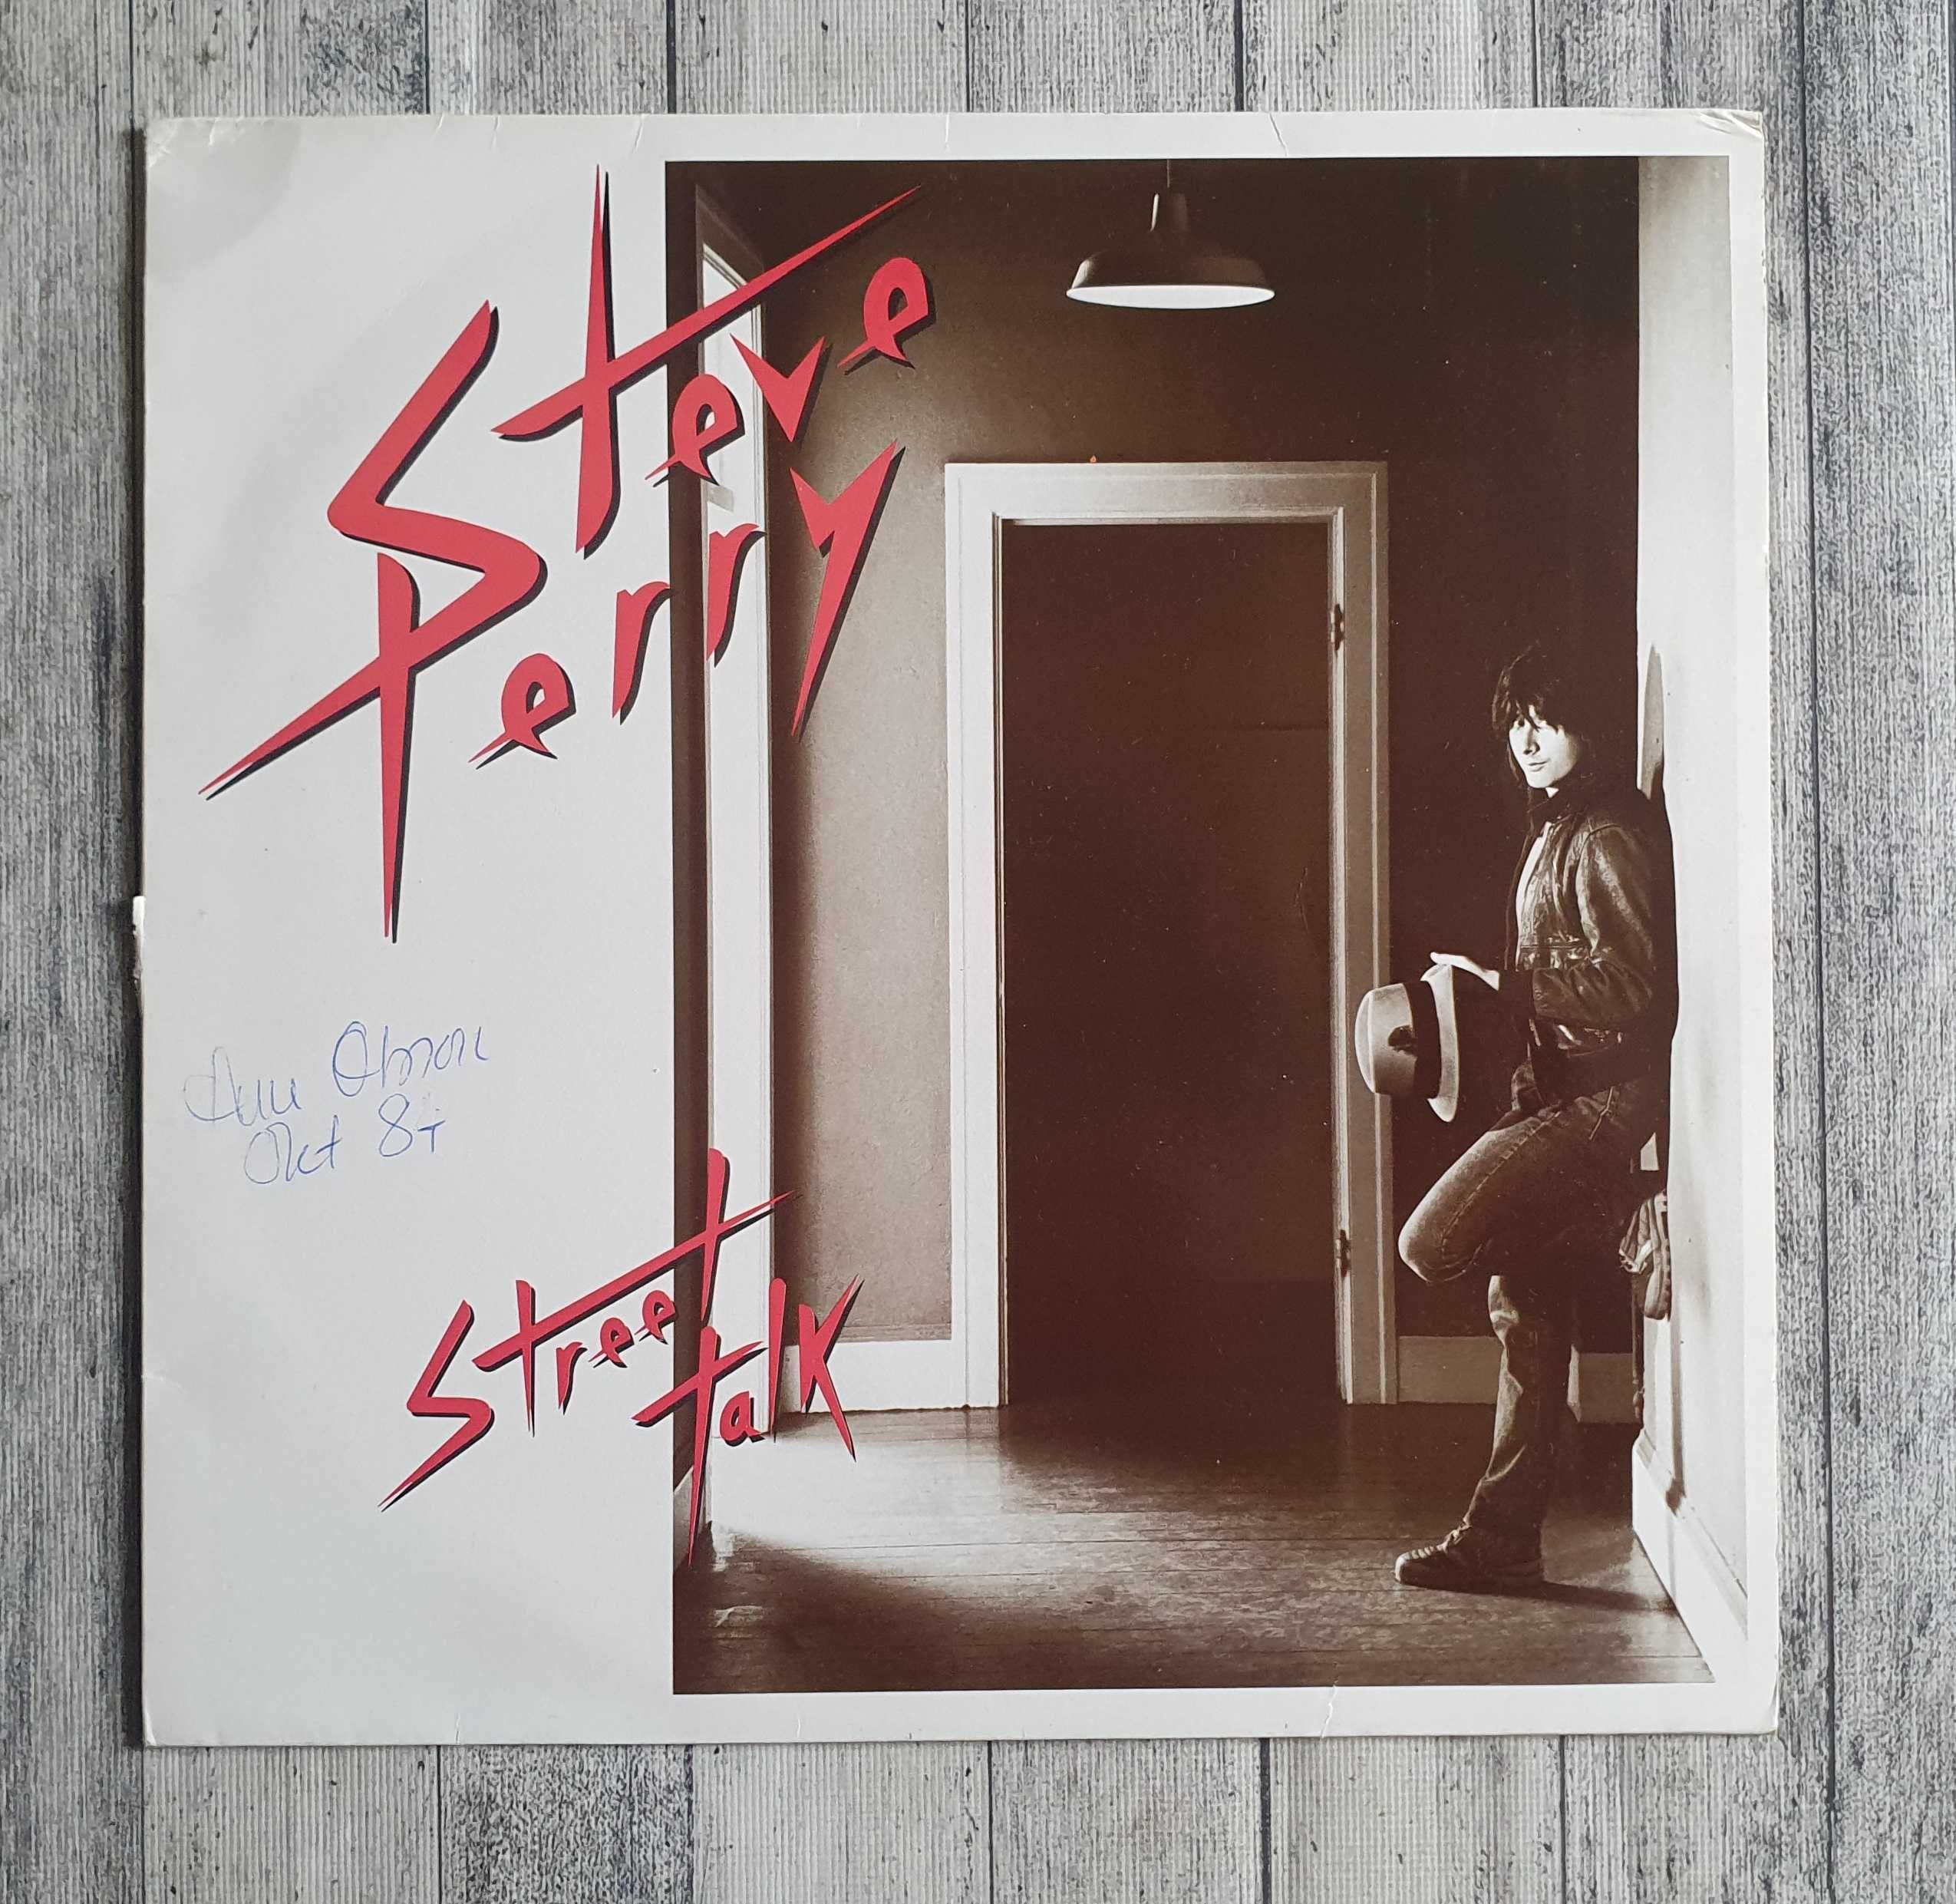 Steve Perry Street Talk LP 12